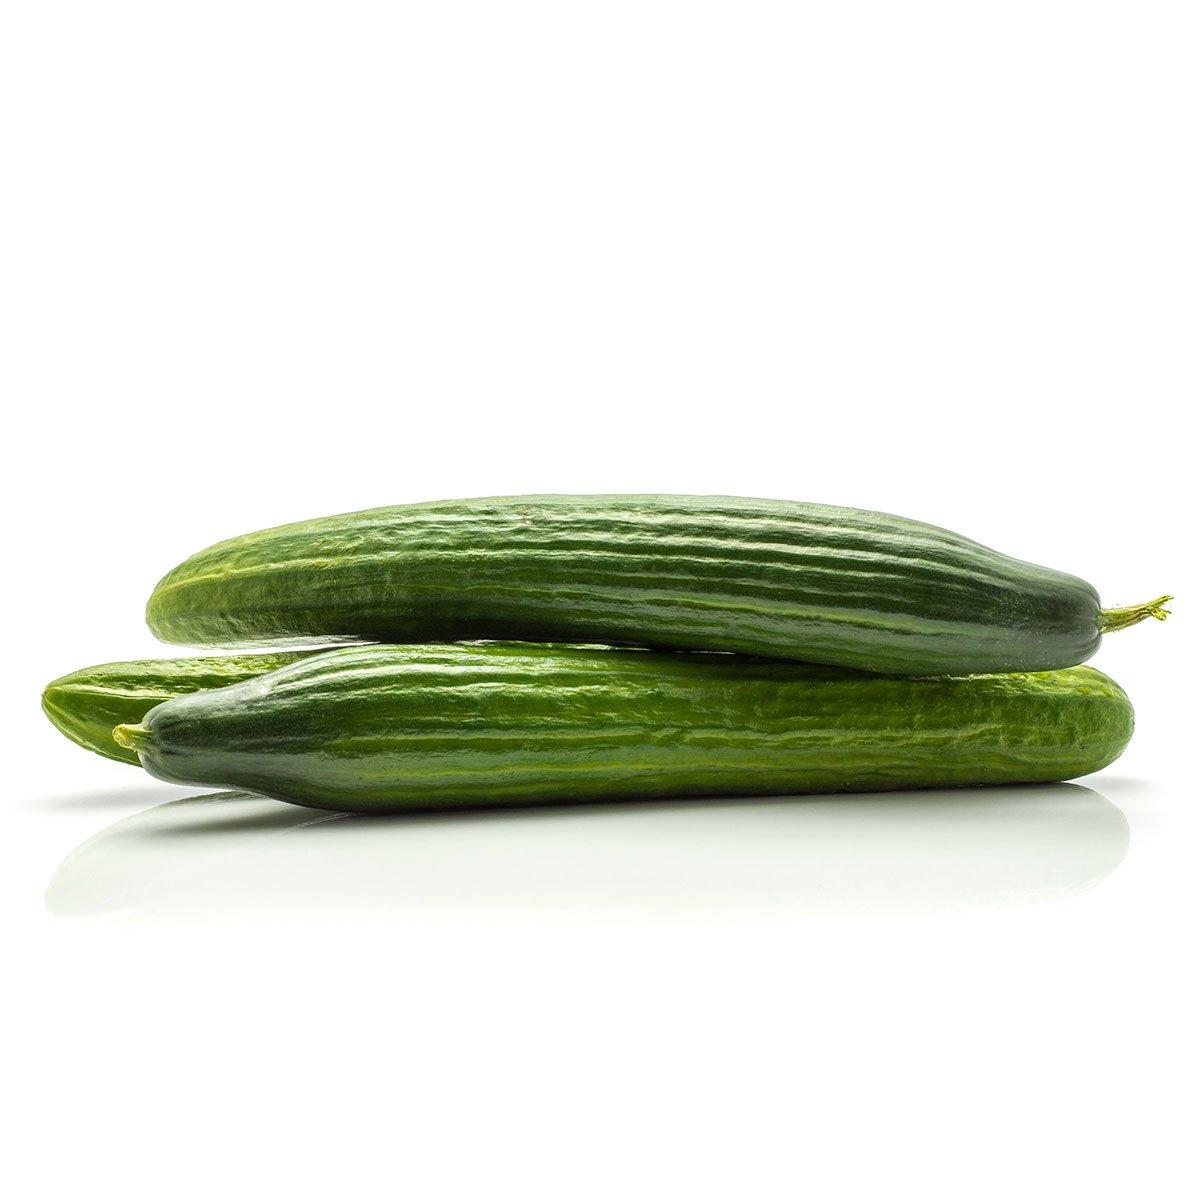 english-cucumber